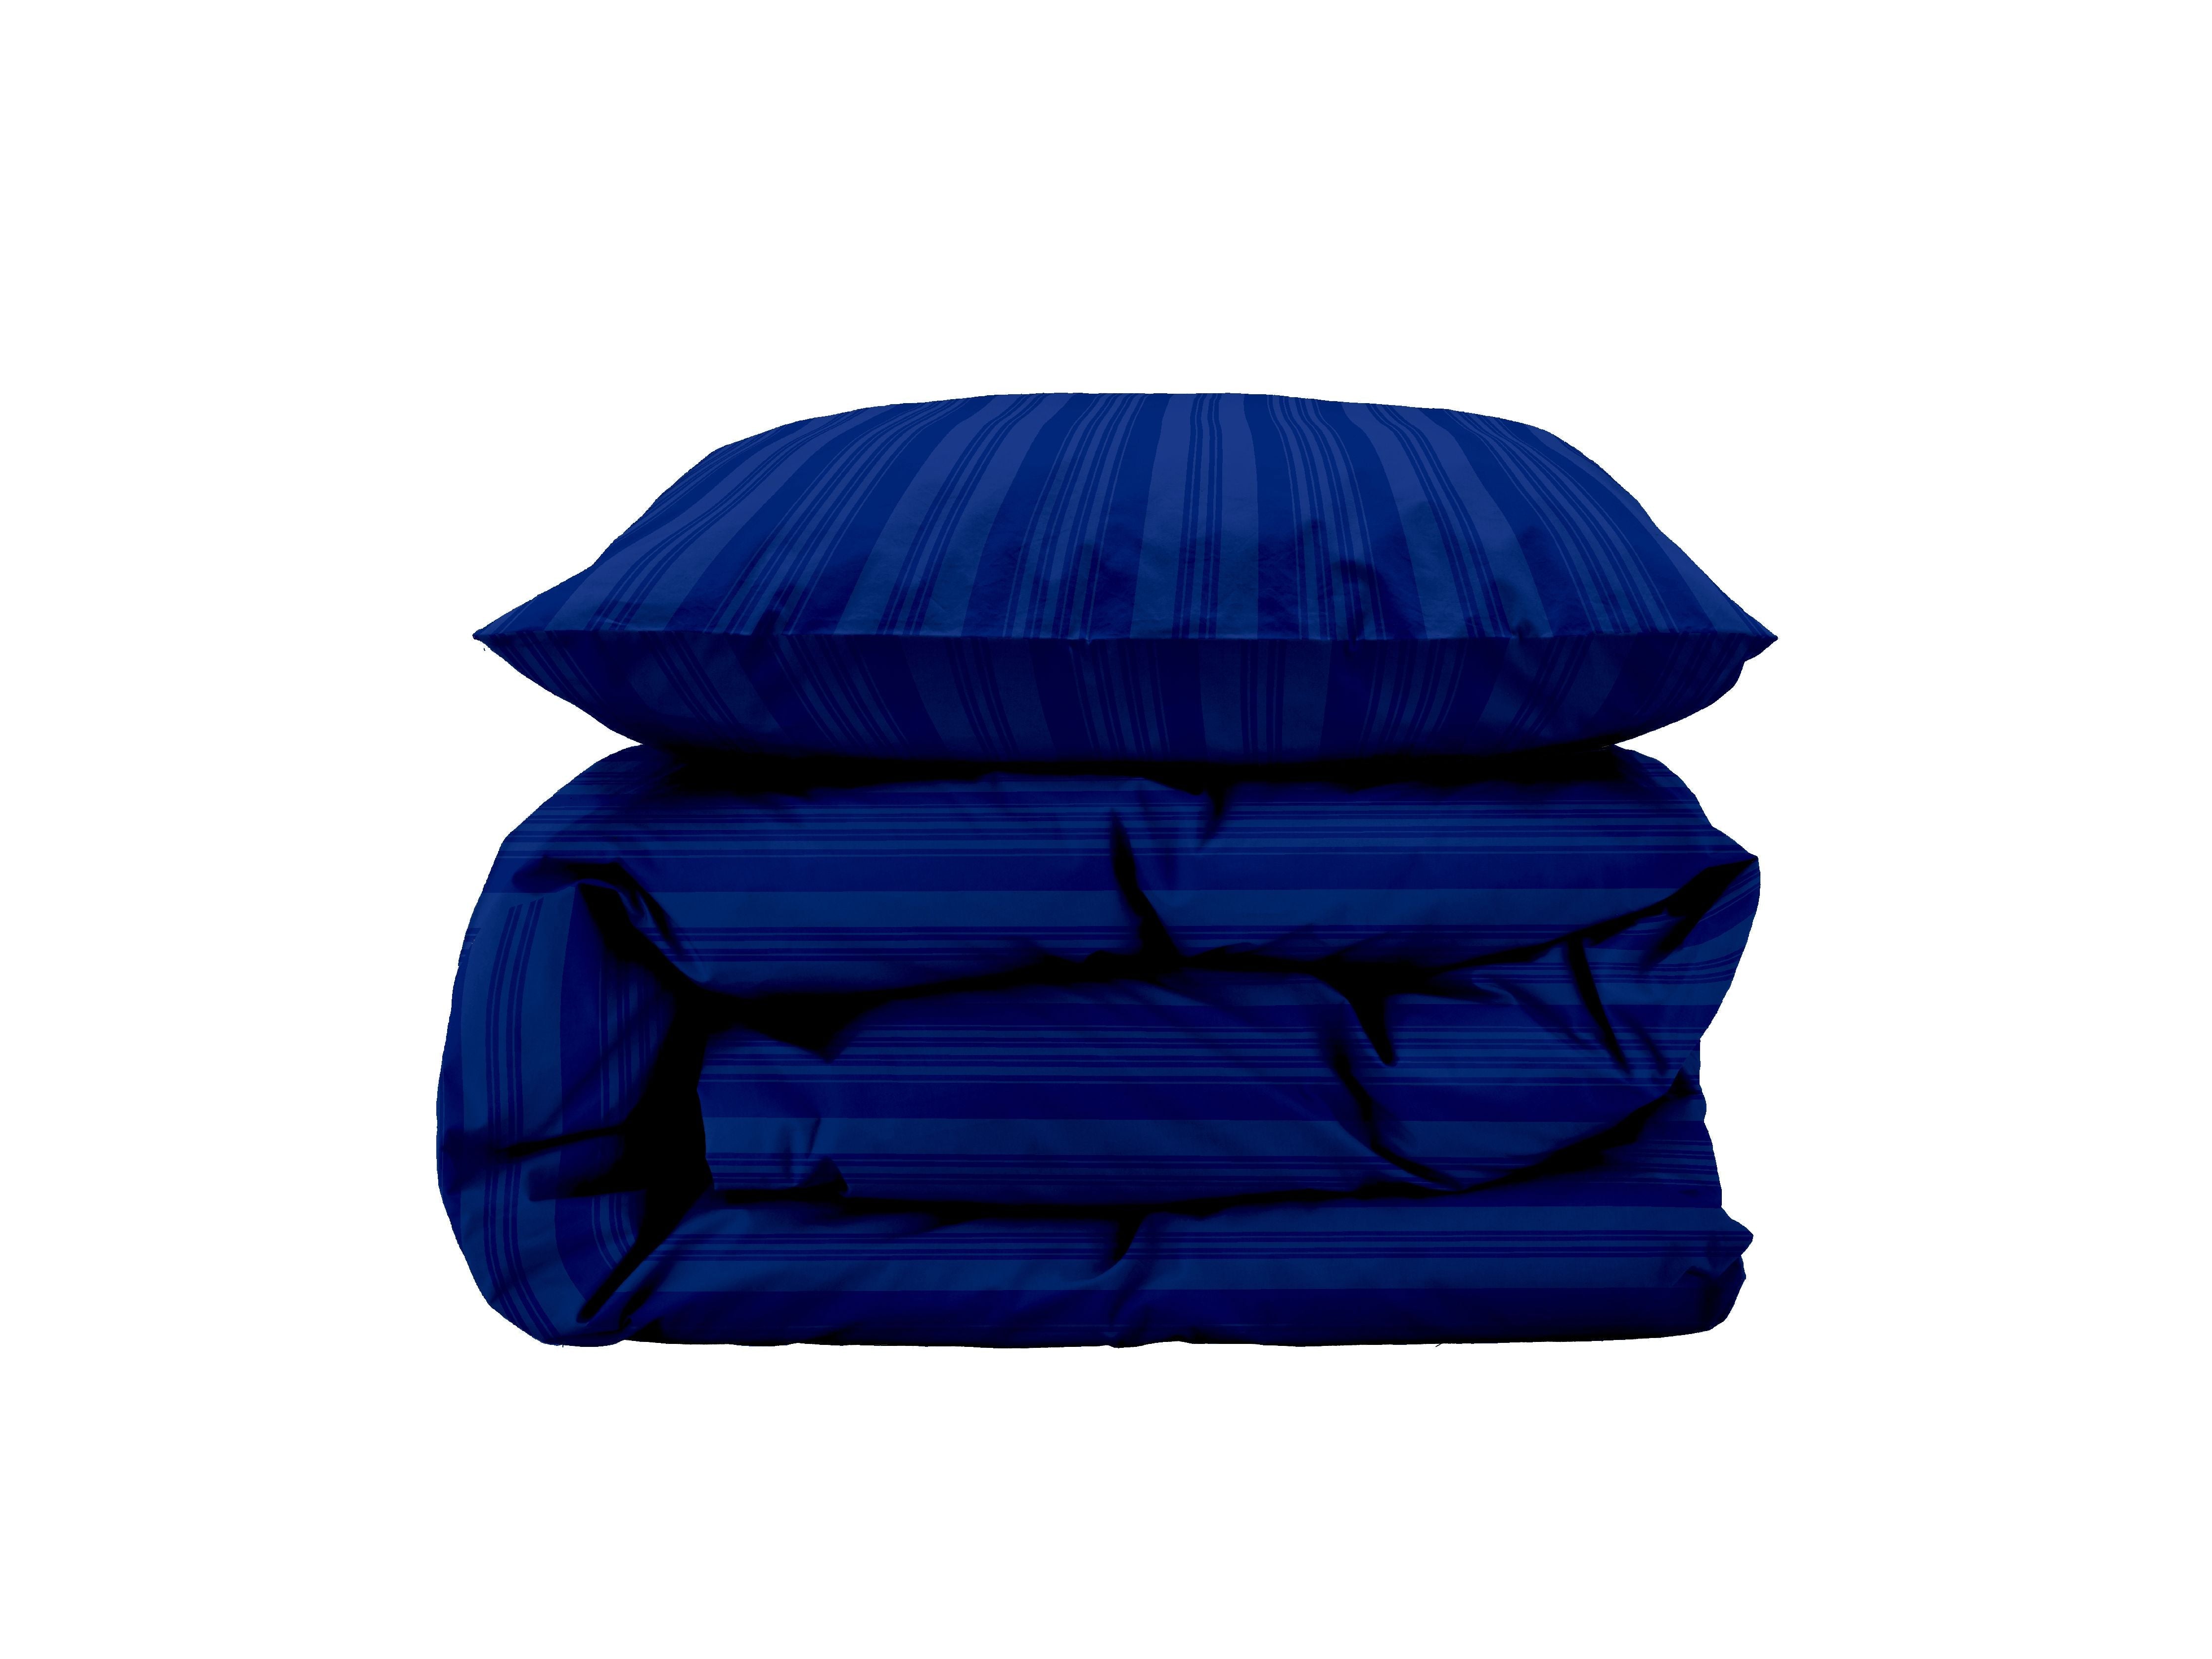 Södahl Noble Bed Linen 200 X 220 Cm, Royal Blue